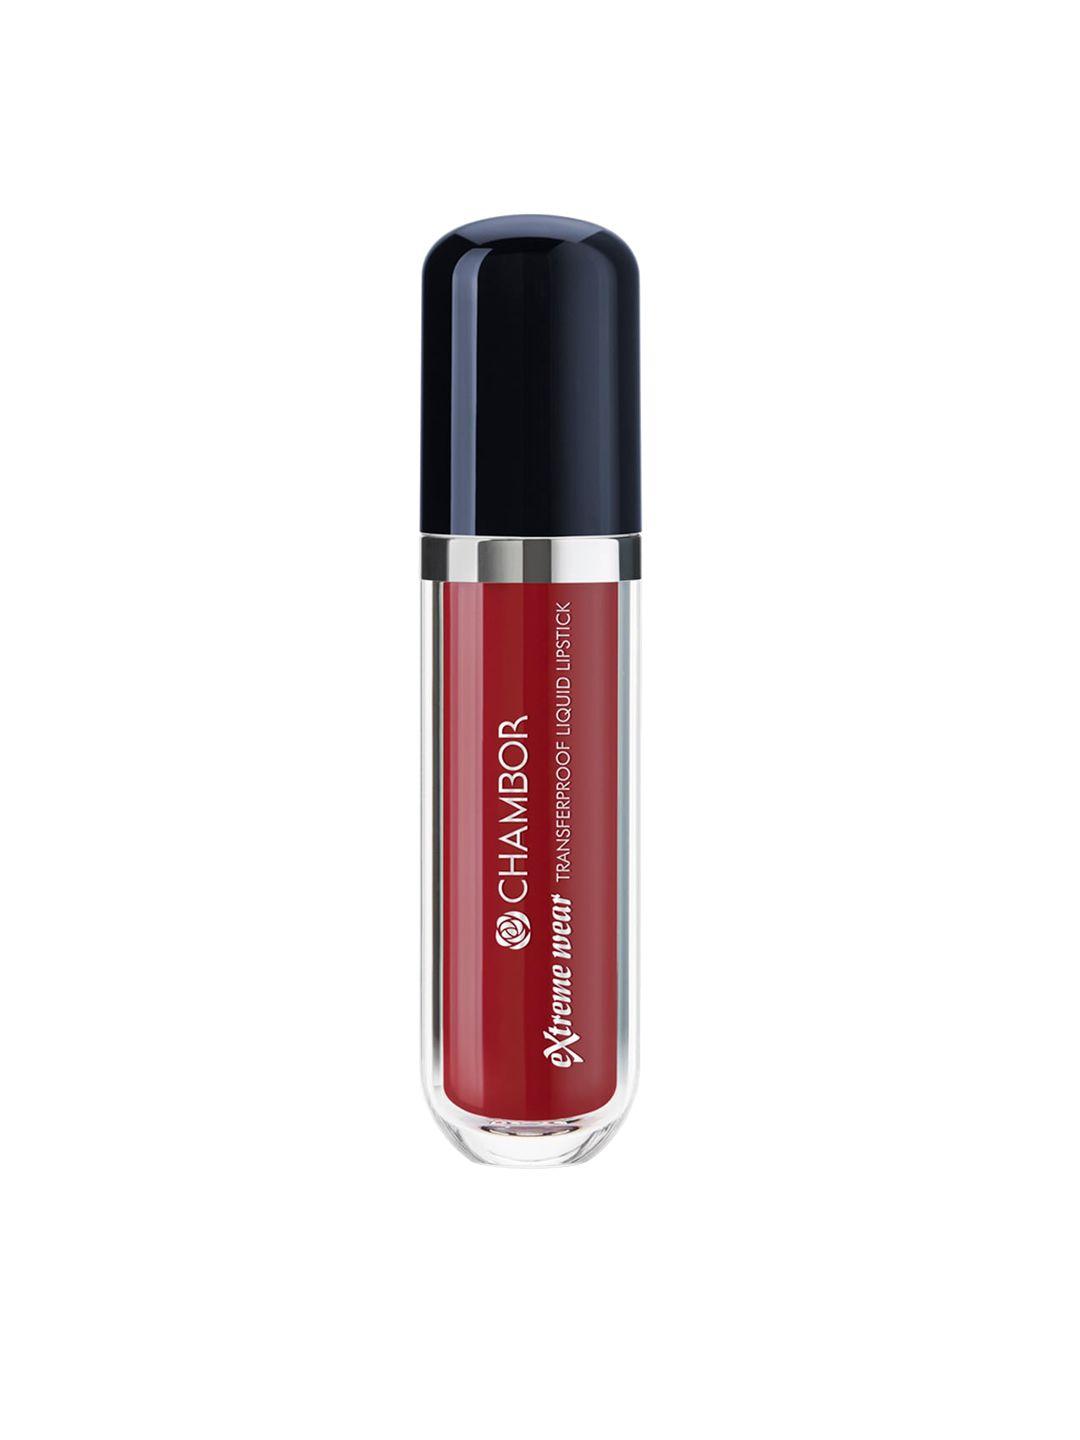 chambor extreme wear transferproof liquid lipstick brun muscade #487 6 ml